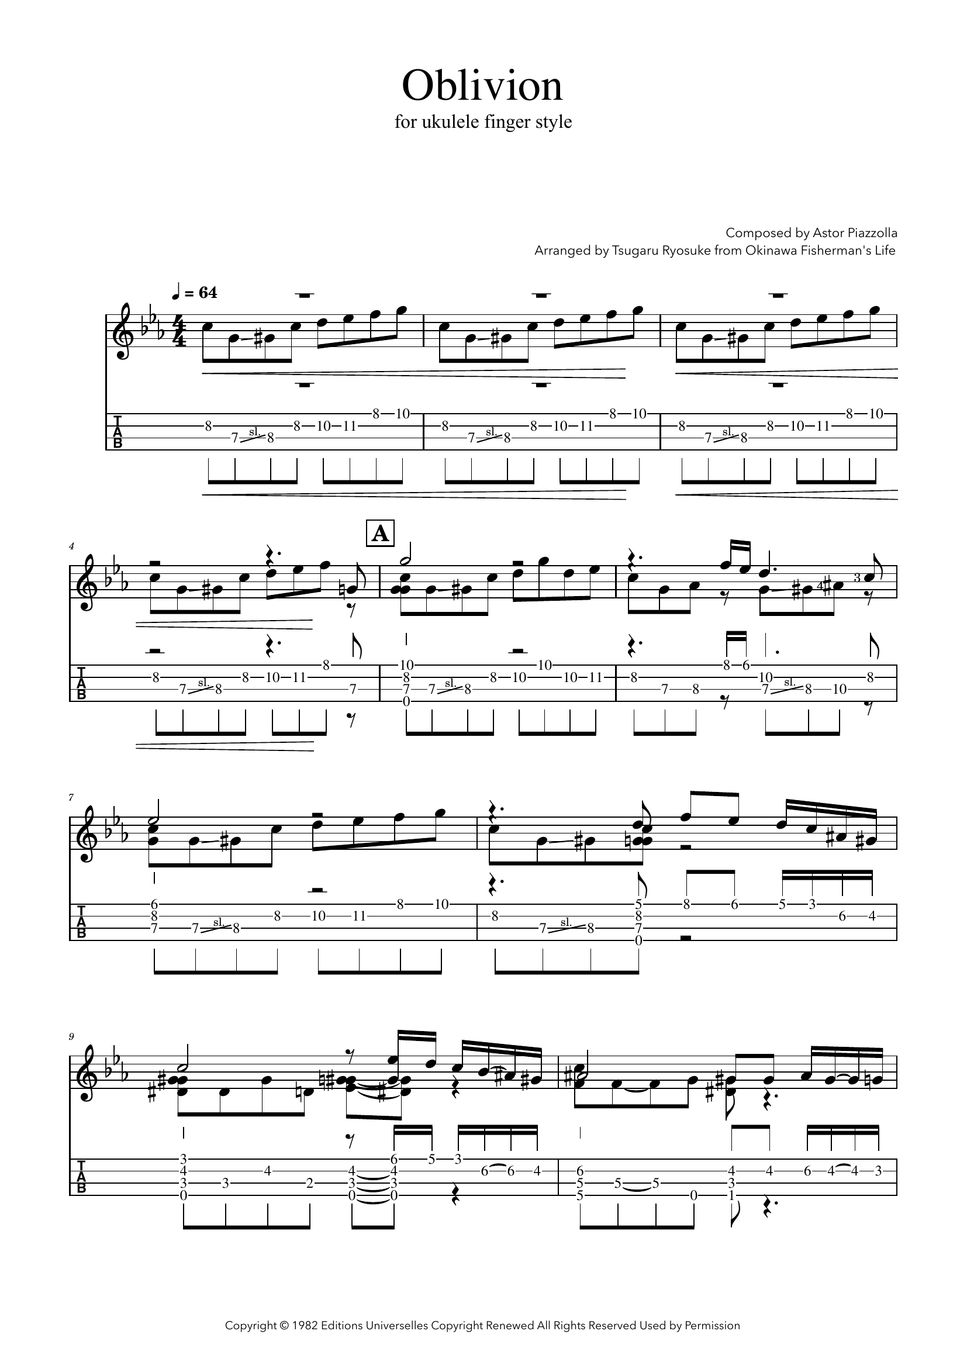 Astor Piazzolla - Oblivion (Ukulele Fingerstyle, Tabbed) by Tsugaru Ryosuke